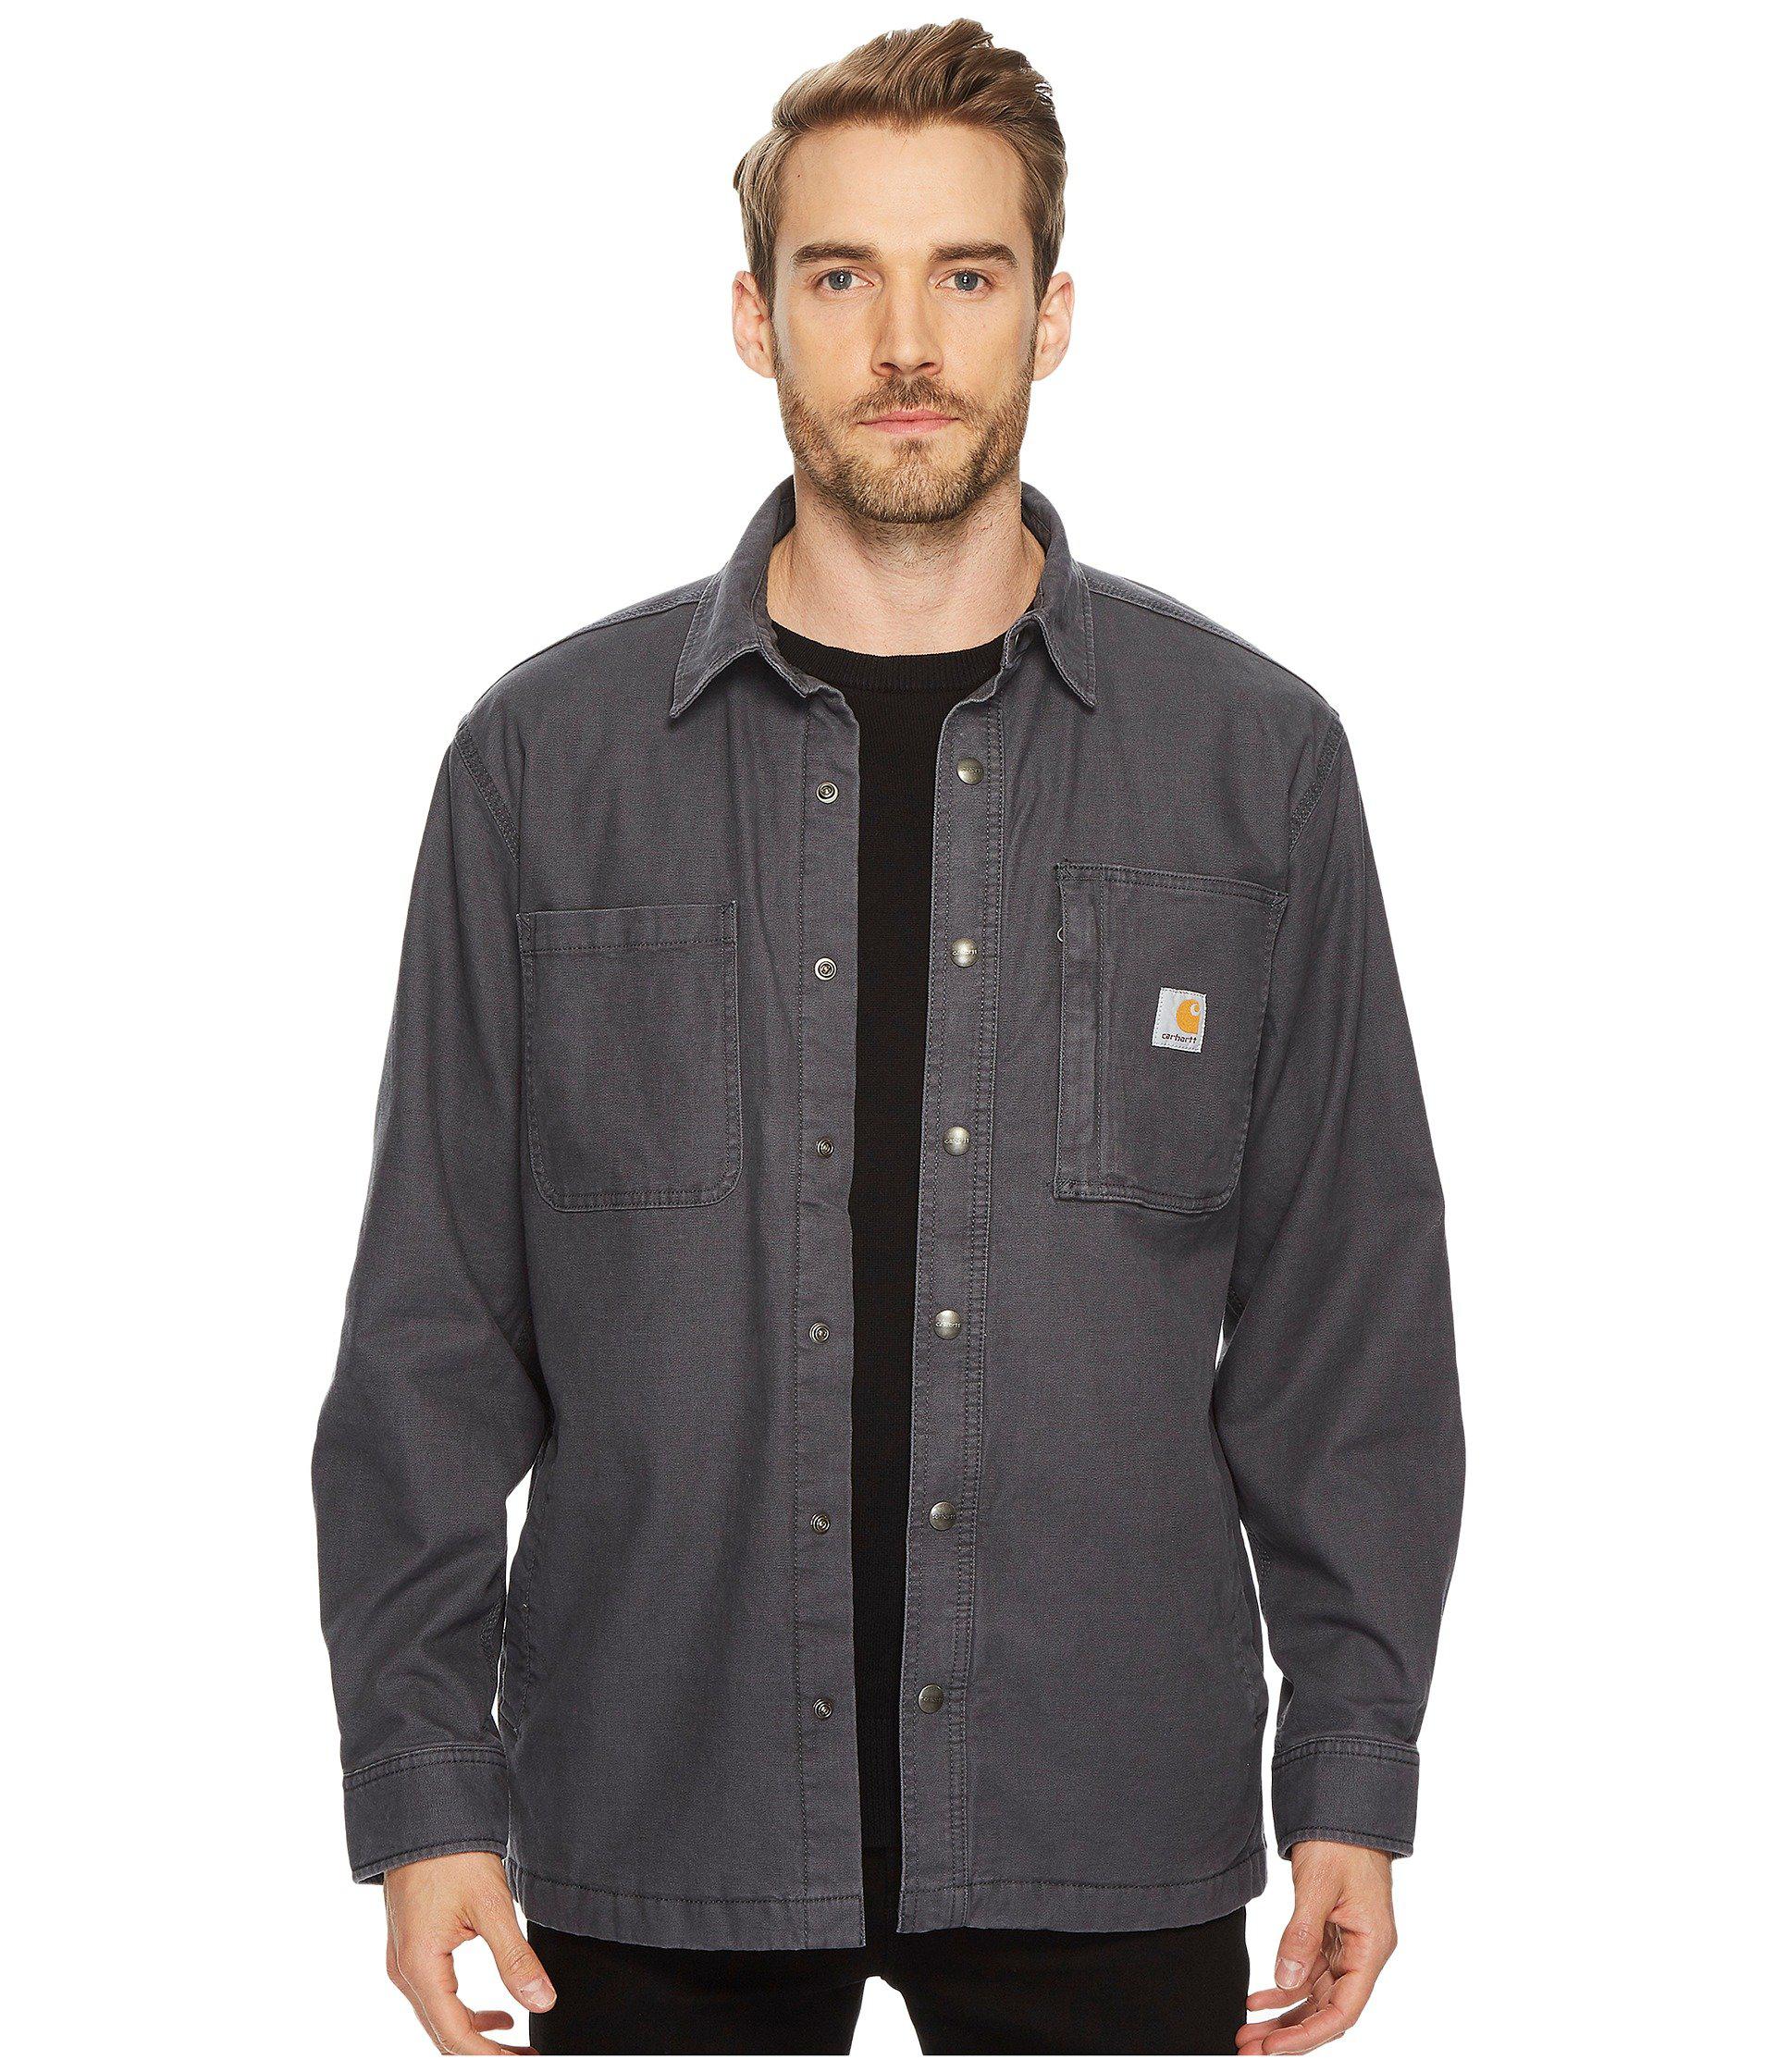 Carhartt Men's Rugged Flex Rigby Shirt Jac Italy, SAVE 46% - scott-burt.com